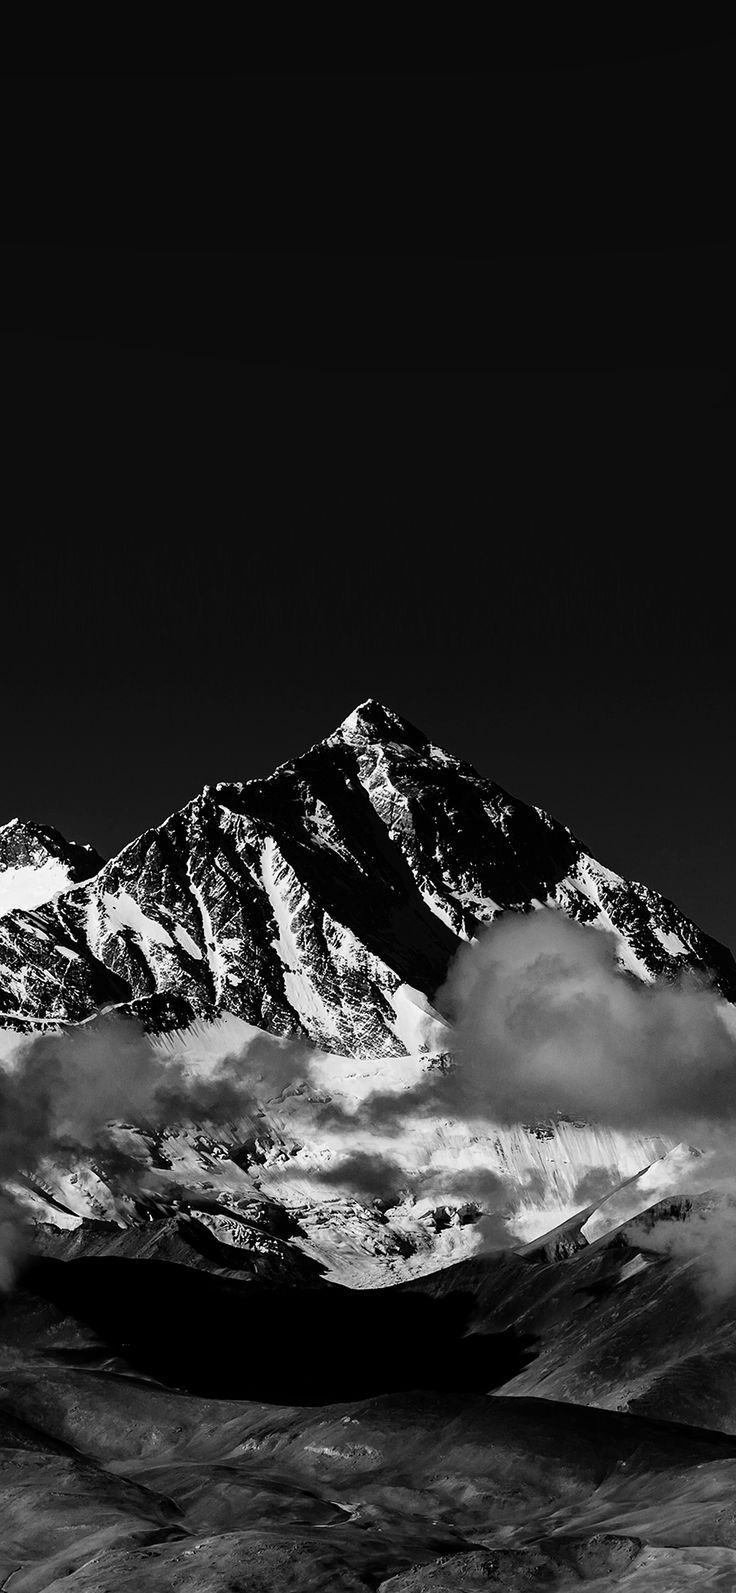 iPhone X wallpaper, snow solo mountain high nature dark bw